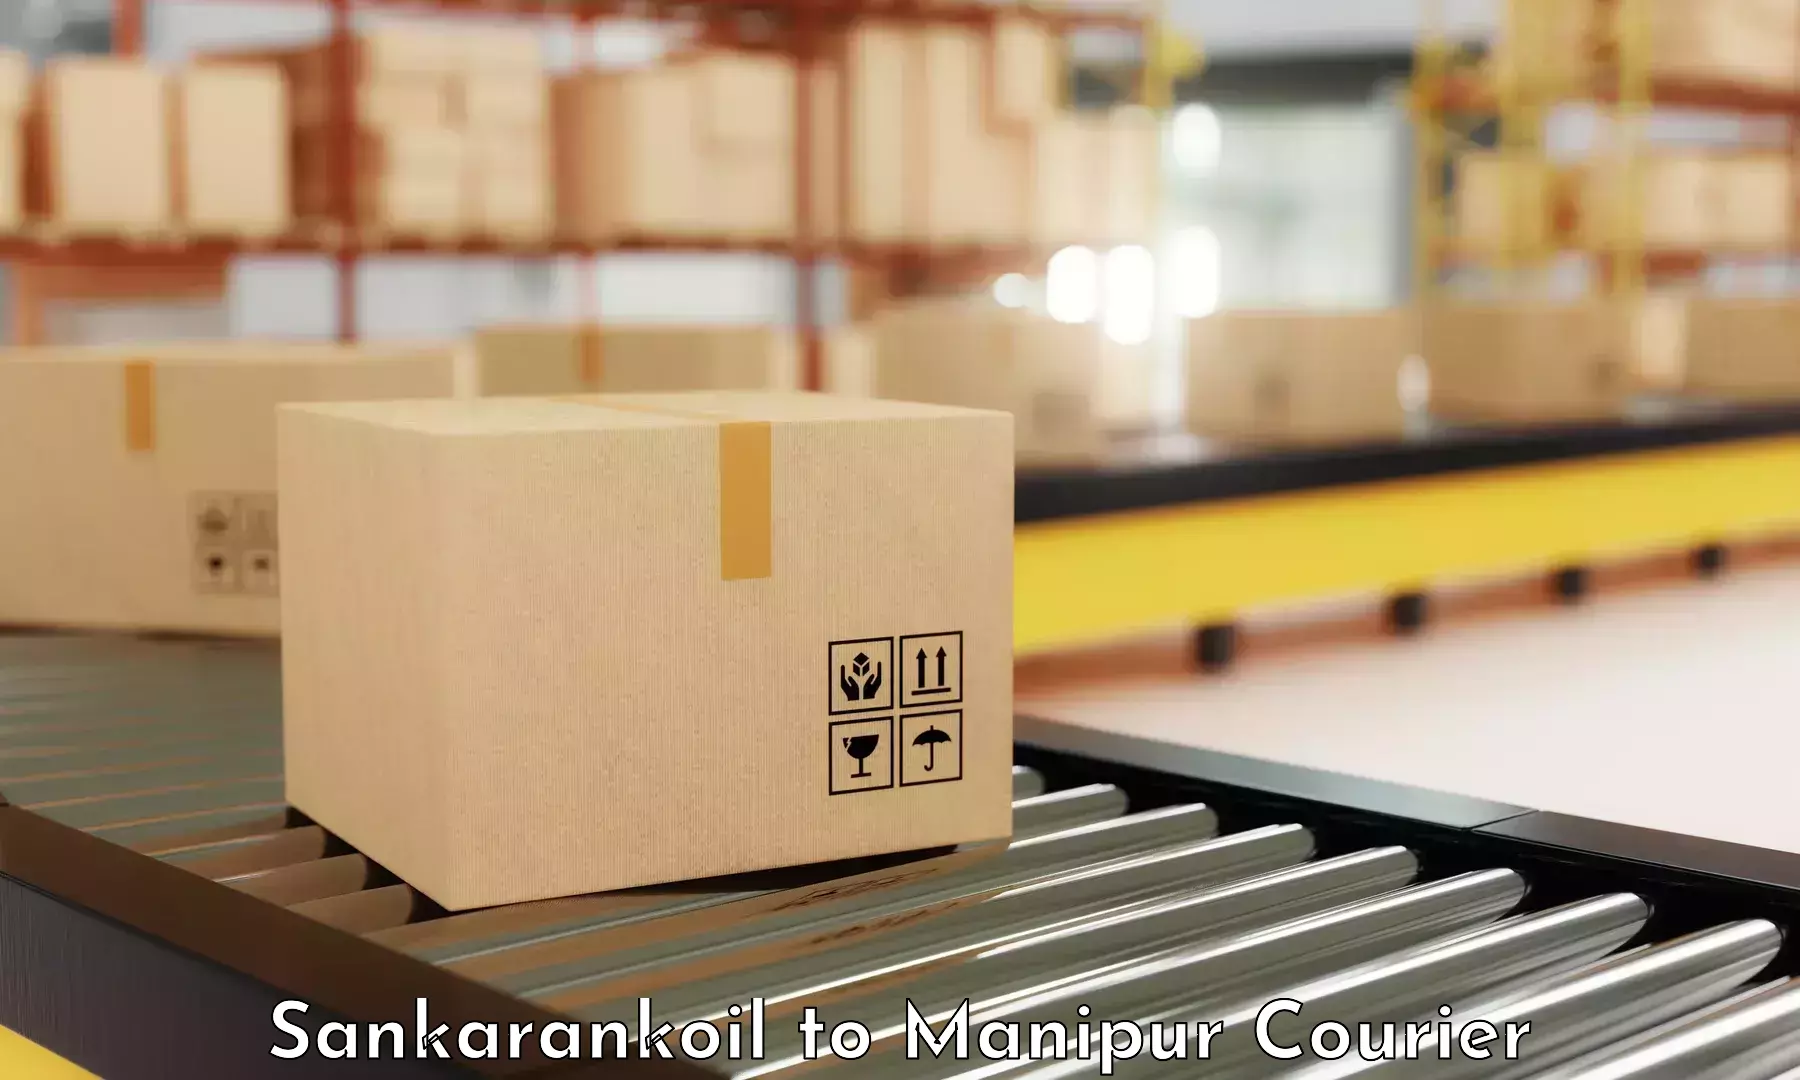 Advanced shipping technology Sankarankoil to Manipur